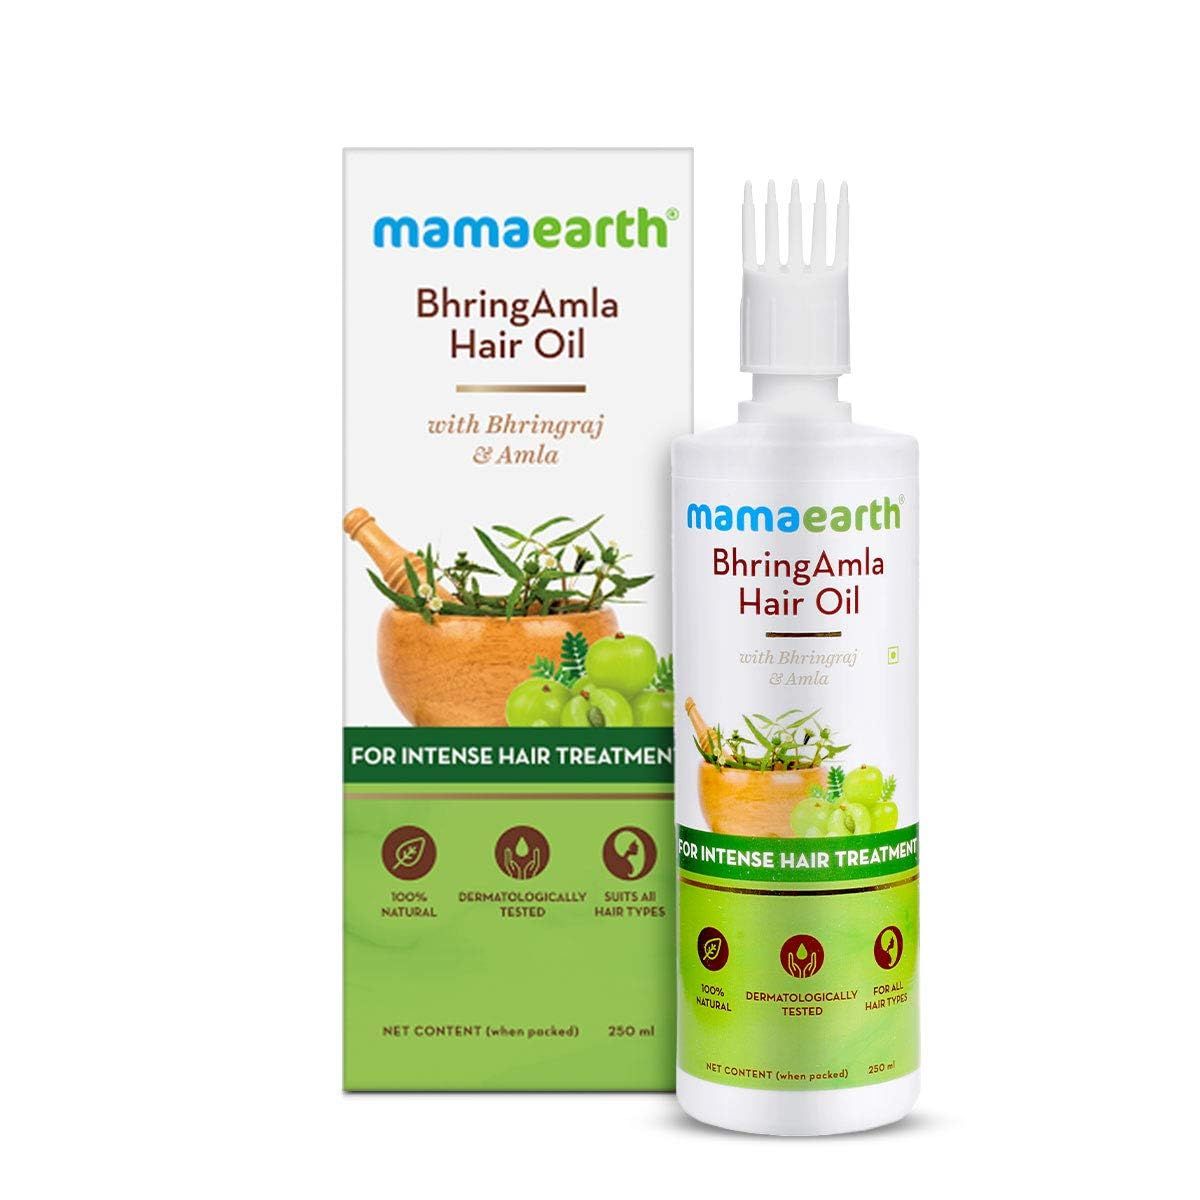 BhringAmla Hair Oil with Bhringraj and Amla for Intense Hair Treatment - 250ml